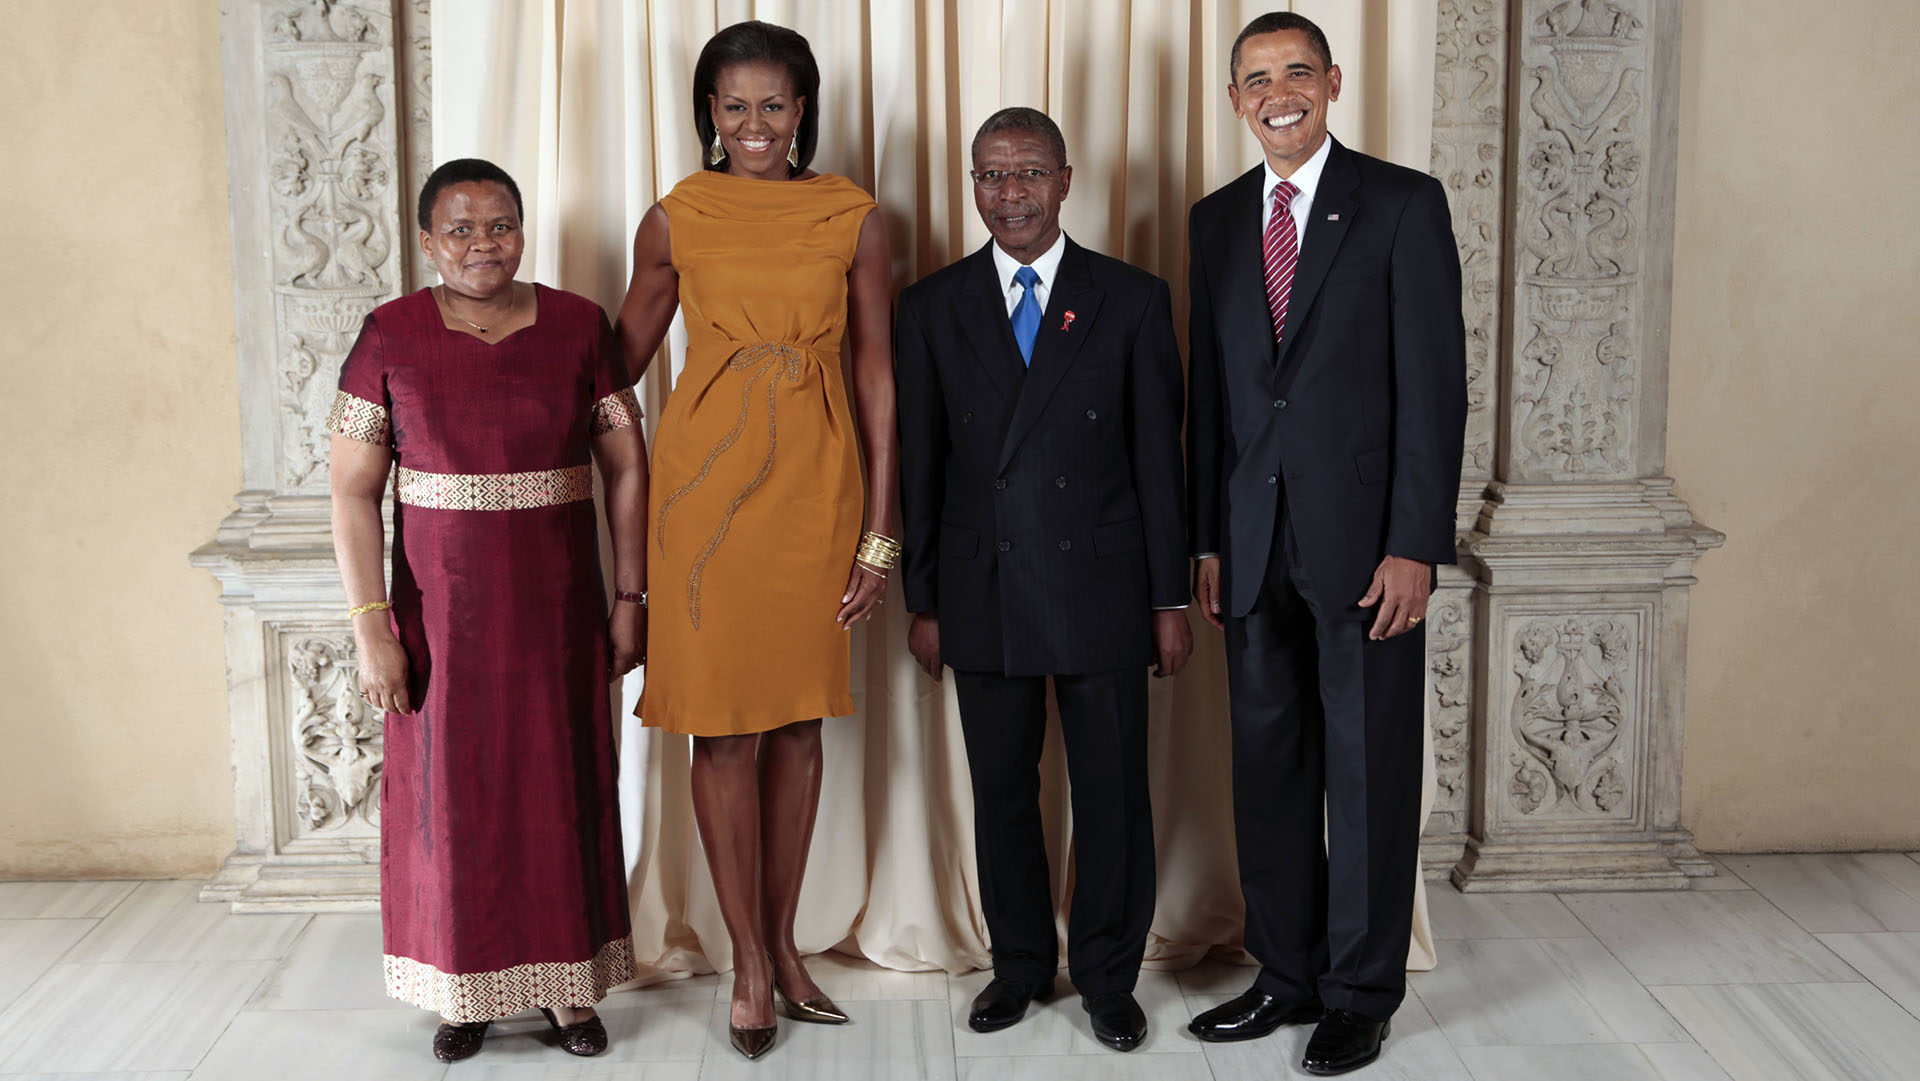 Le premier ministre du Royaume du Lesotho Pakalitha Mosisili, avec sa femme Mathato, en présence du couple présidentiel Obama en 2009 à New York. (Photo:Wikimedia Commons/Lawrence Jackson/White House)